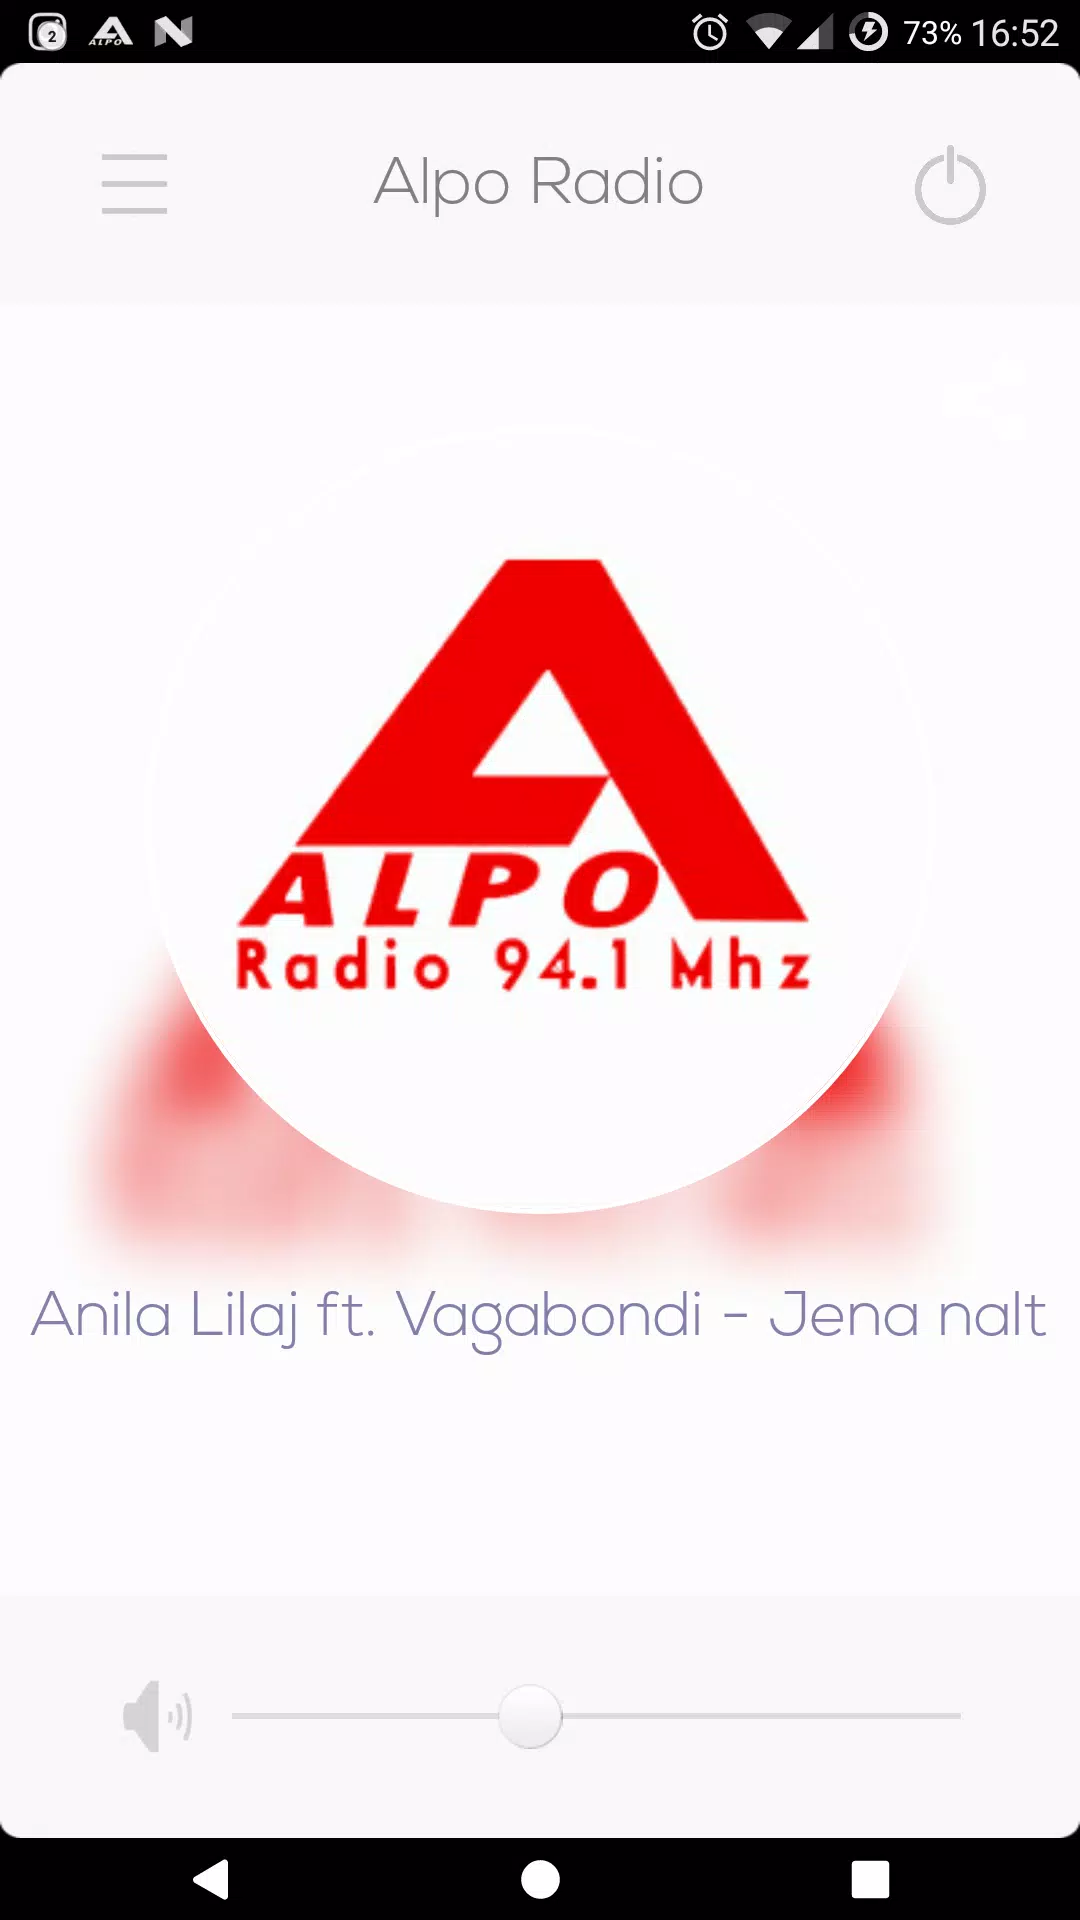 Alpo Radio for Android - APK Download